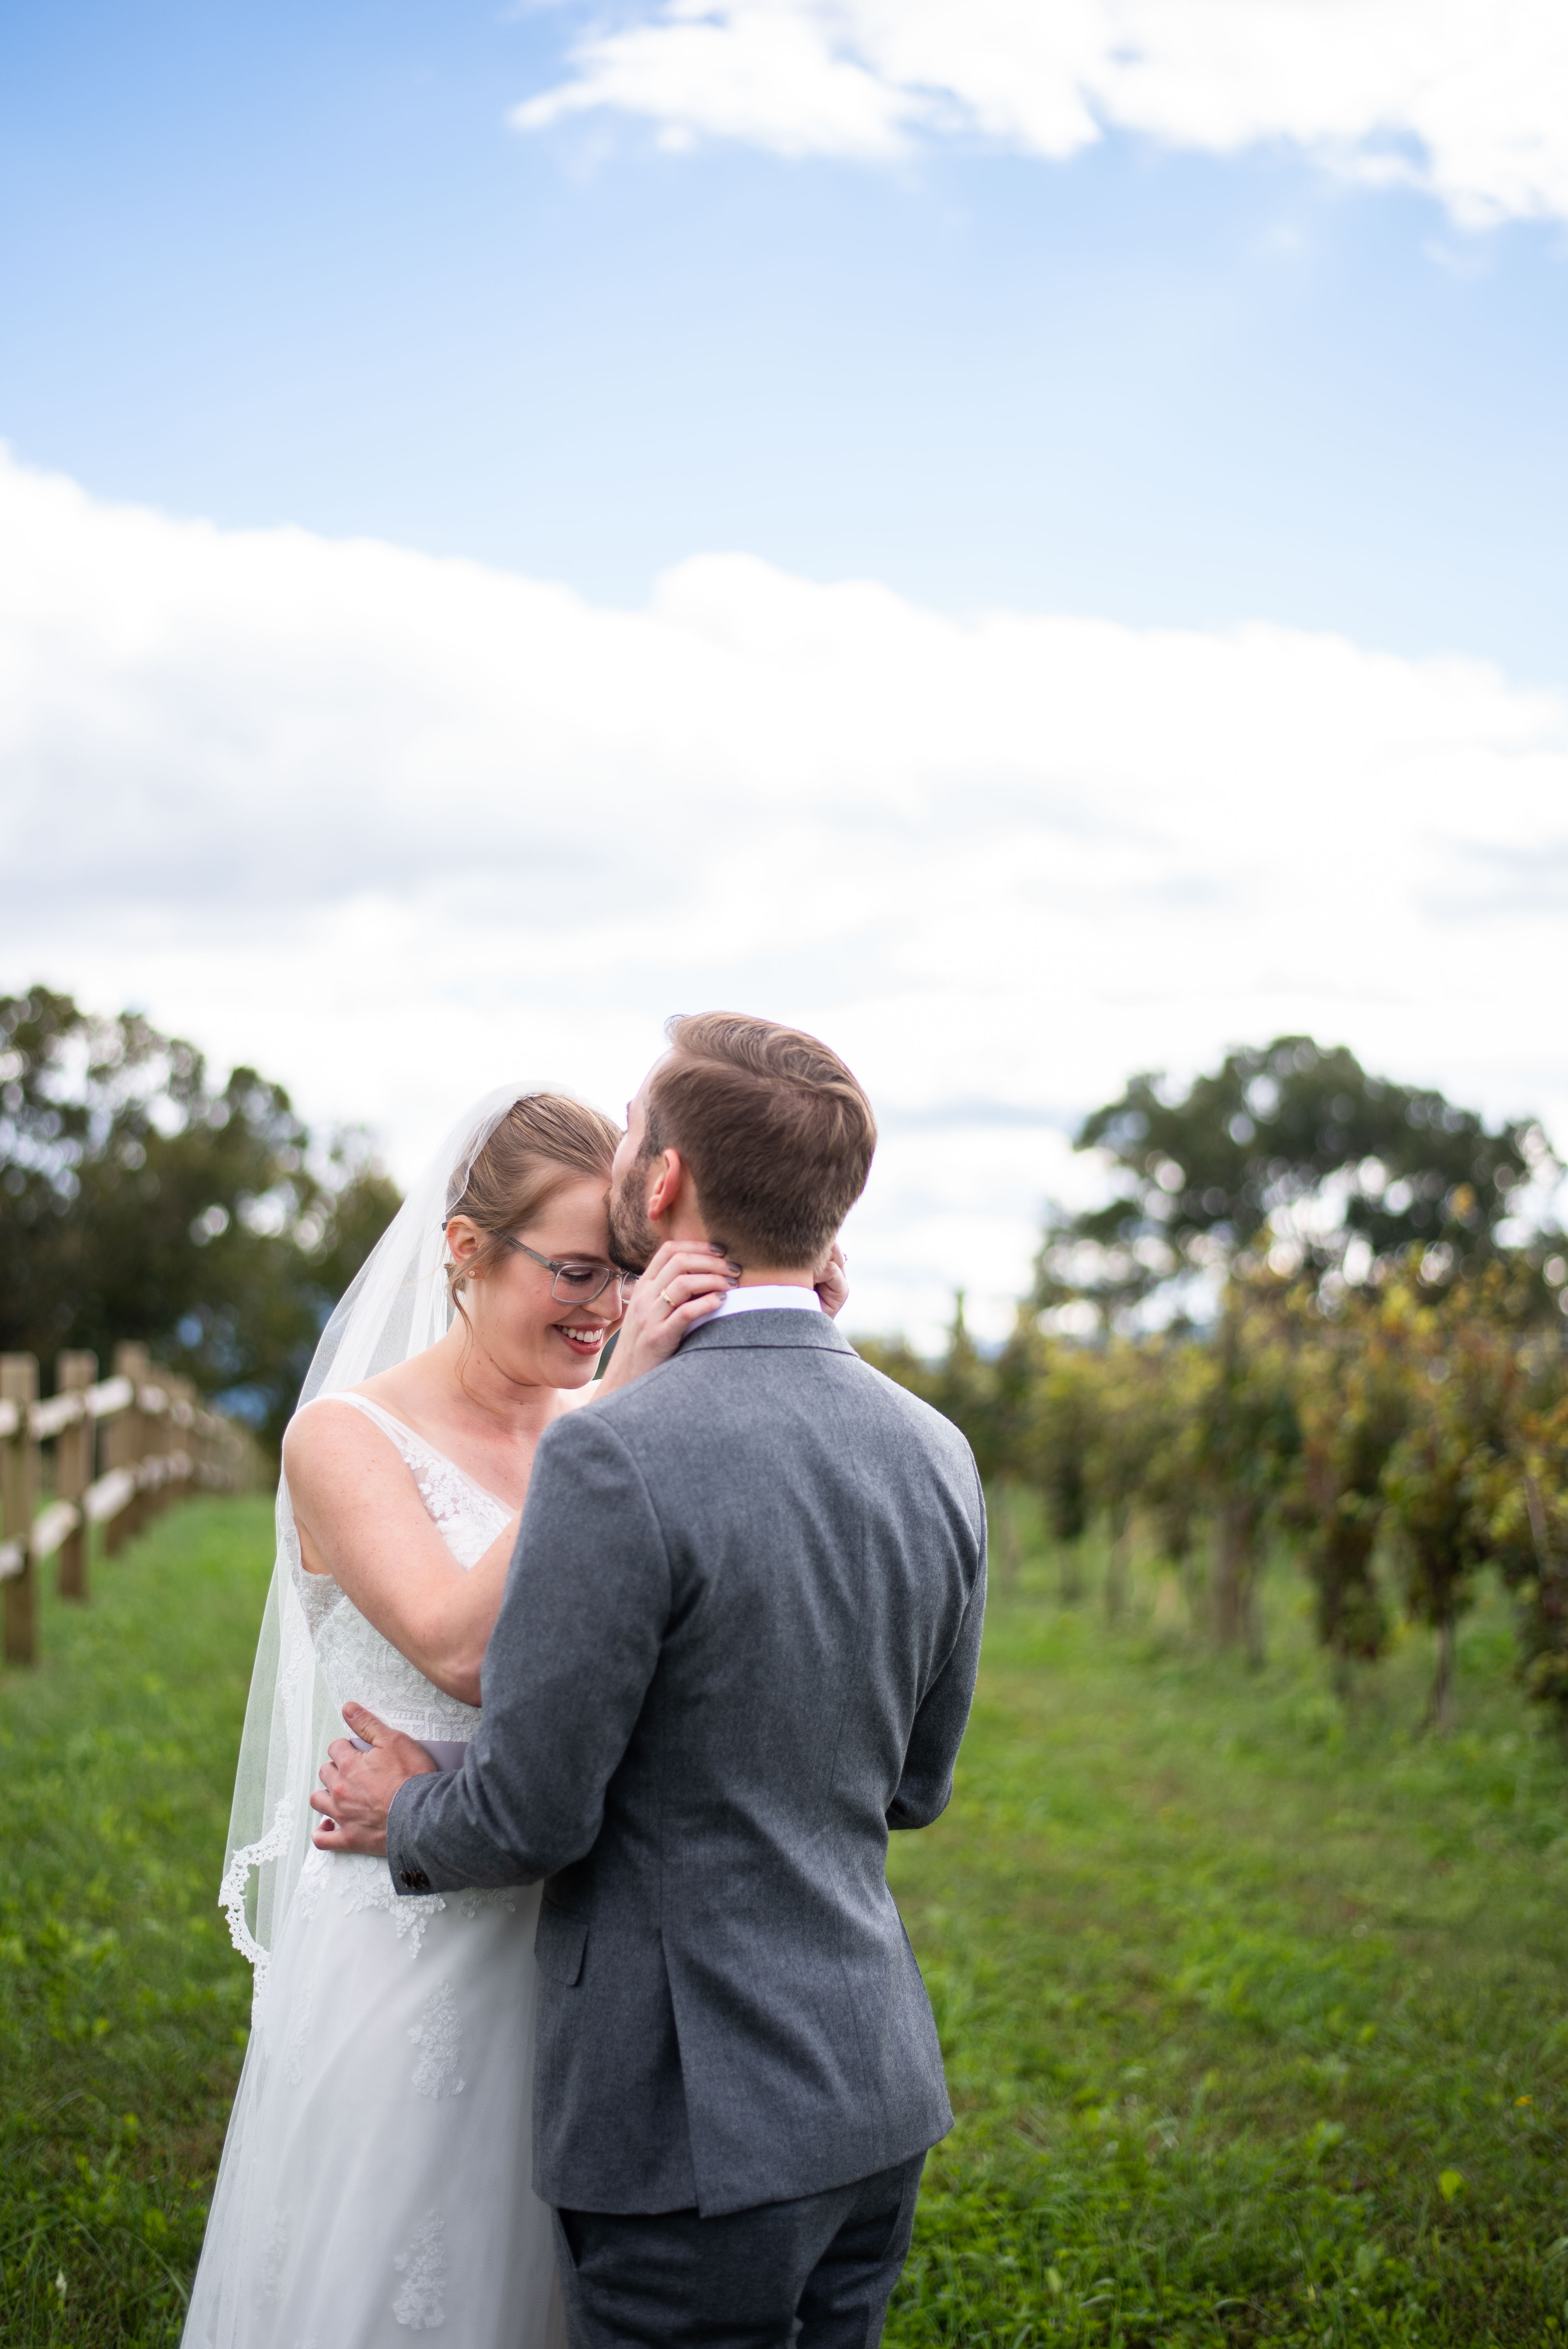 faithbrooke barn and vineyards wedding luray va